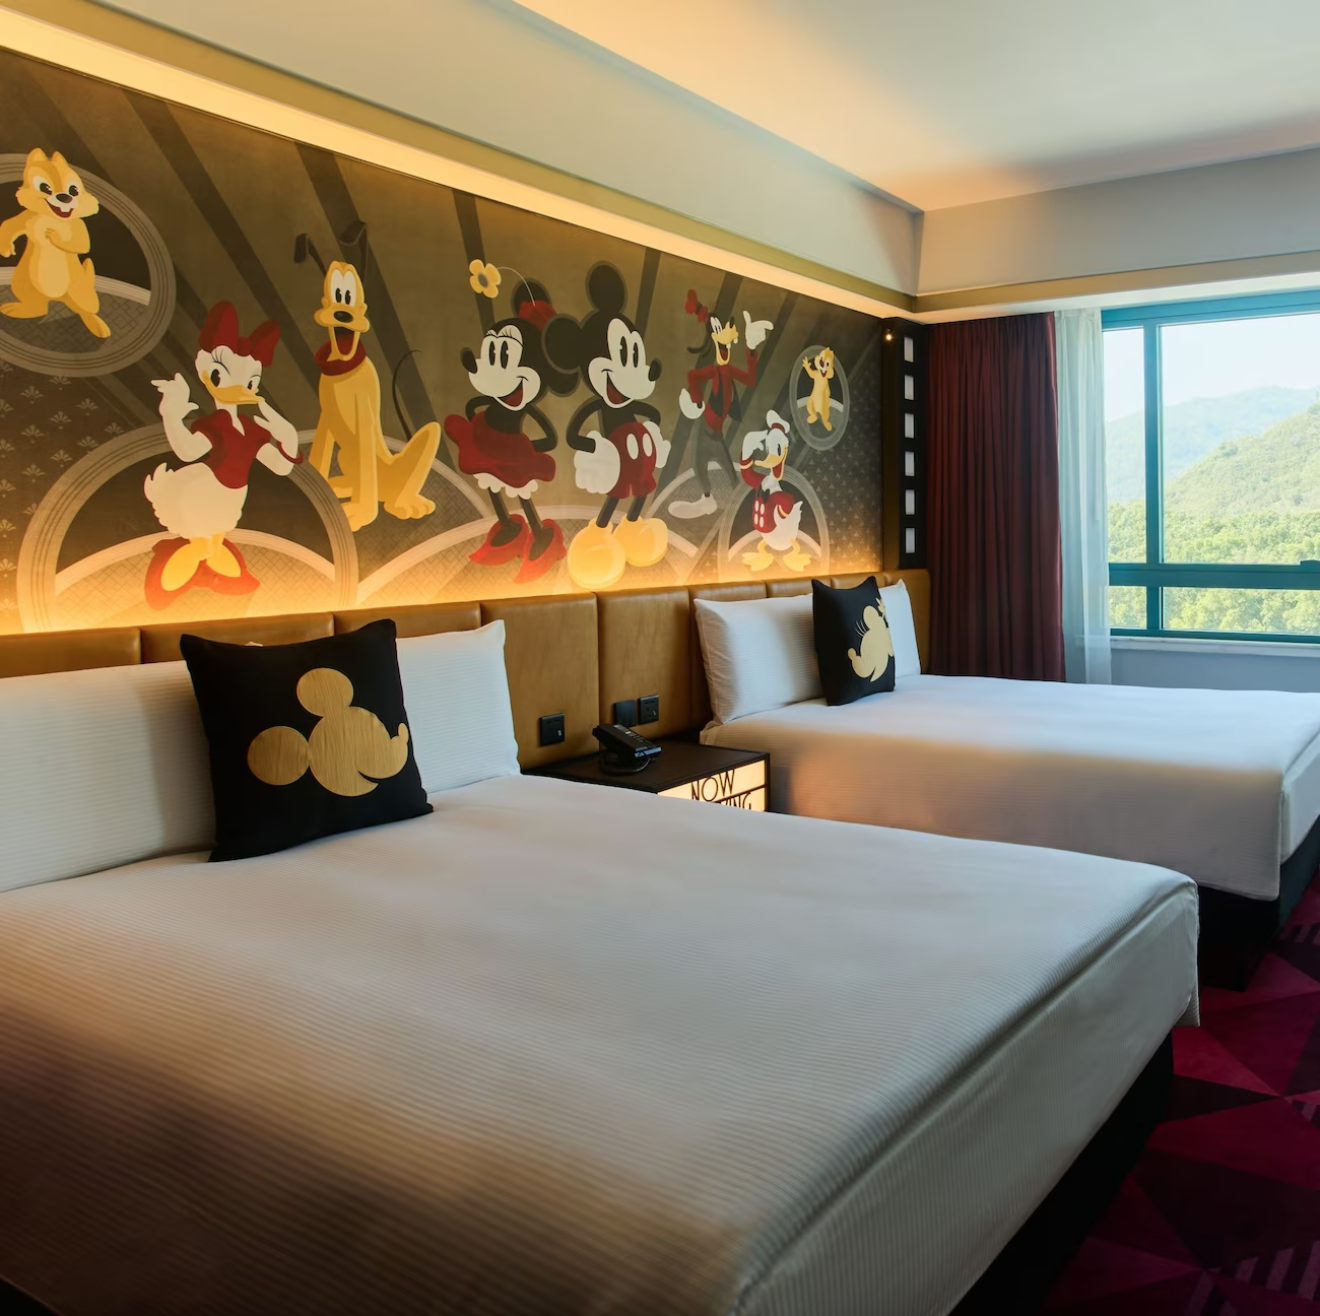 SNEAK PEEK: Disney Reveals NEW Renovated Hotel Rooms